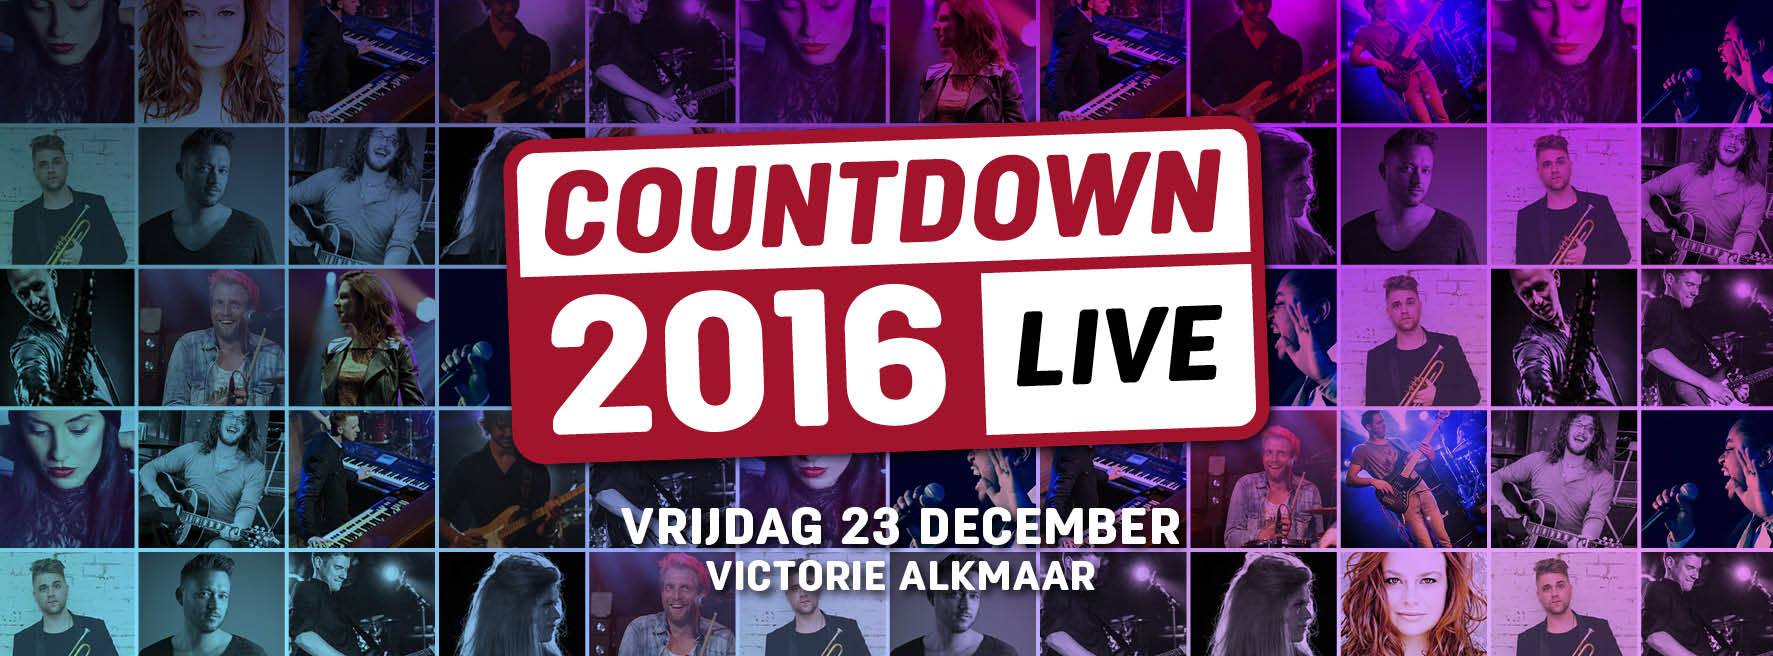 Countdown 2016 LIVE